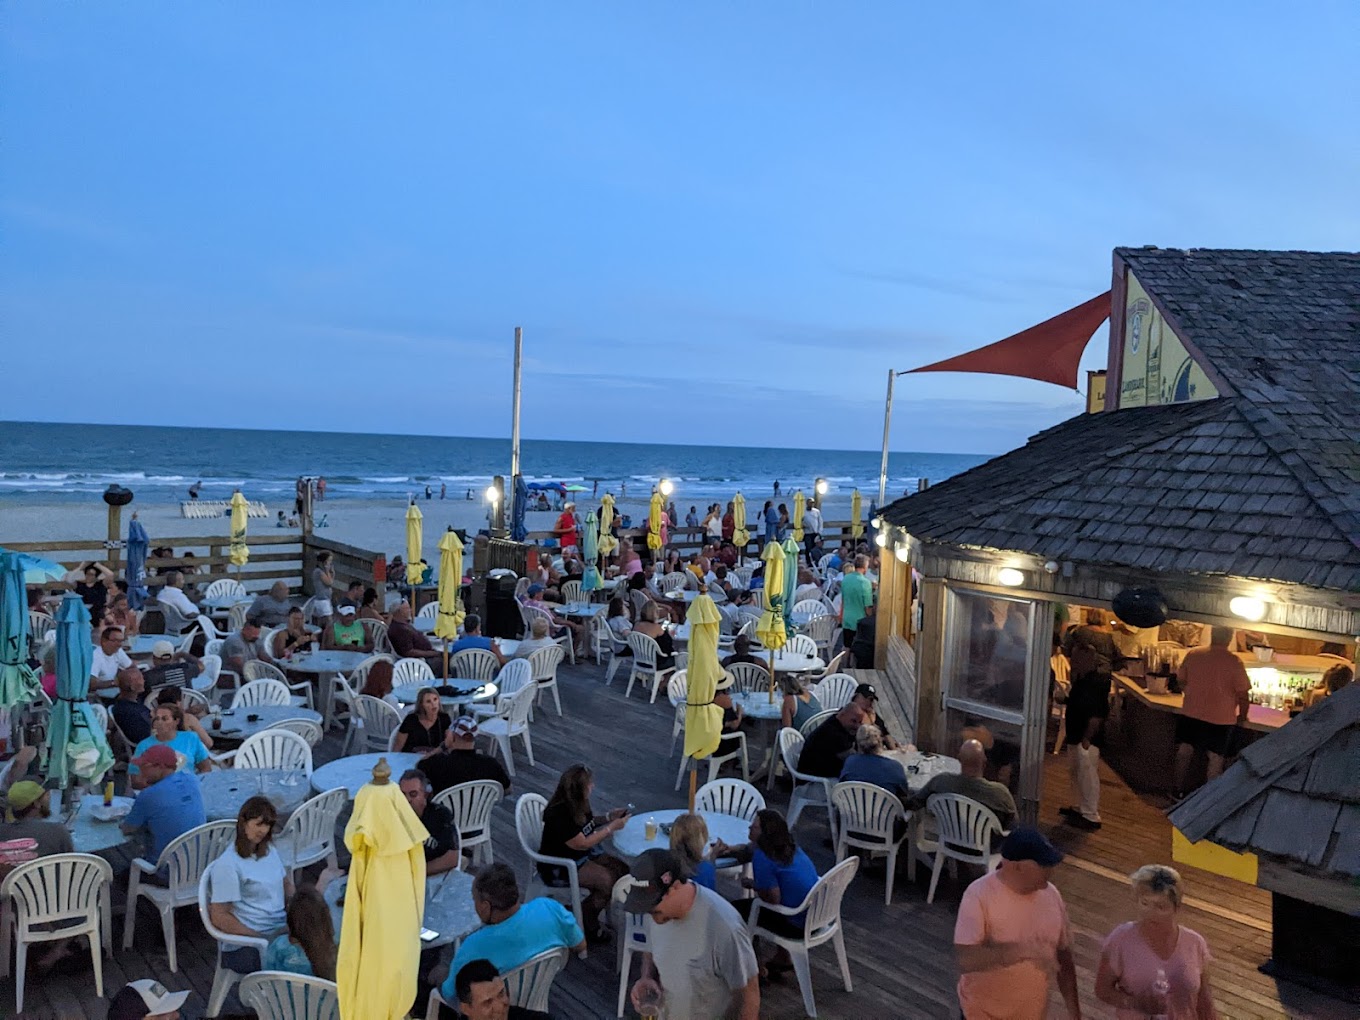 Myrtle Beach Hotels With a Tiki Bar